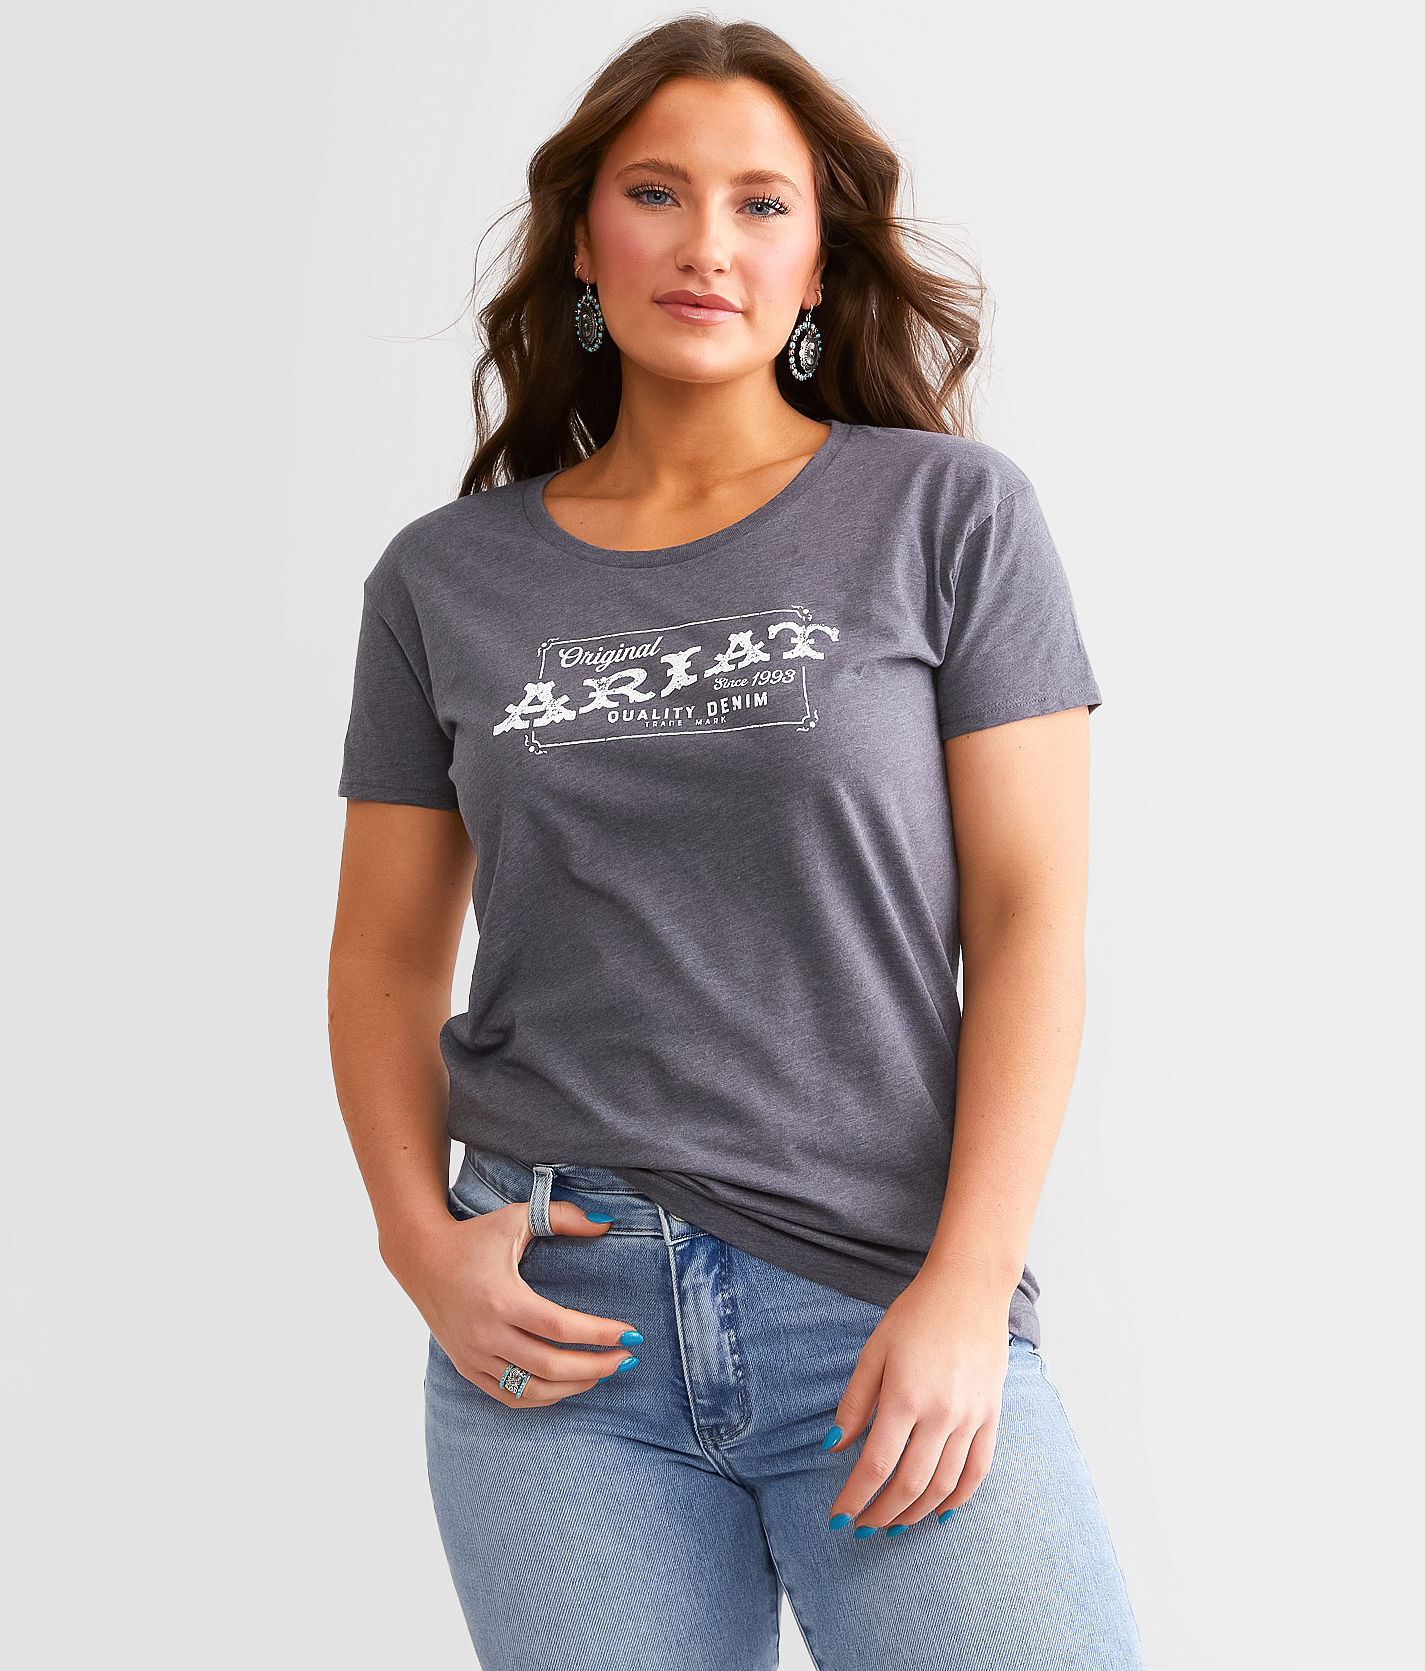 Ariat Denim Label T-Shirt  - Grey - female - Size: Small